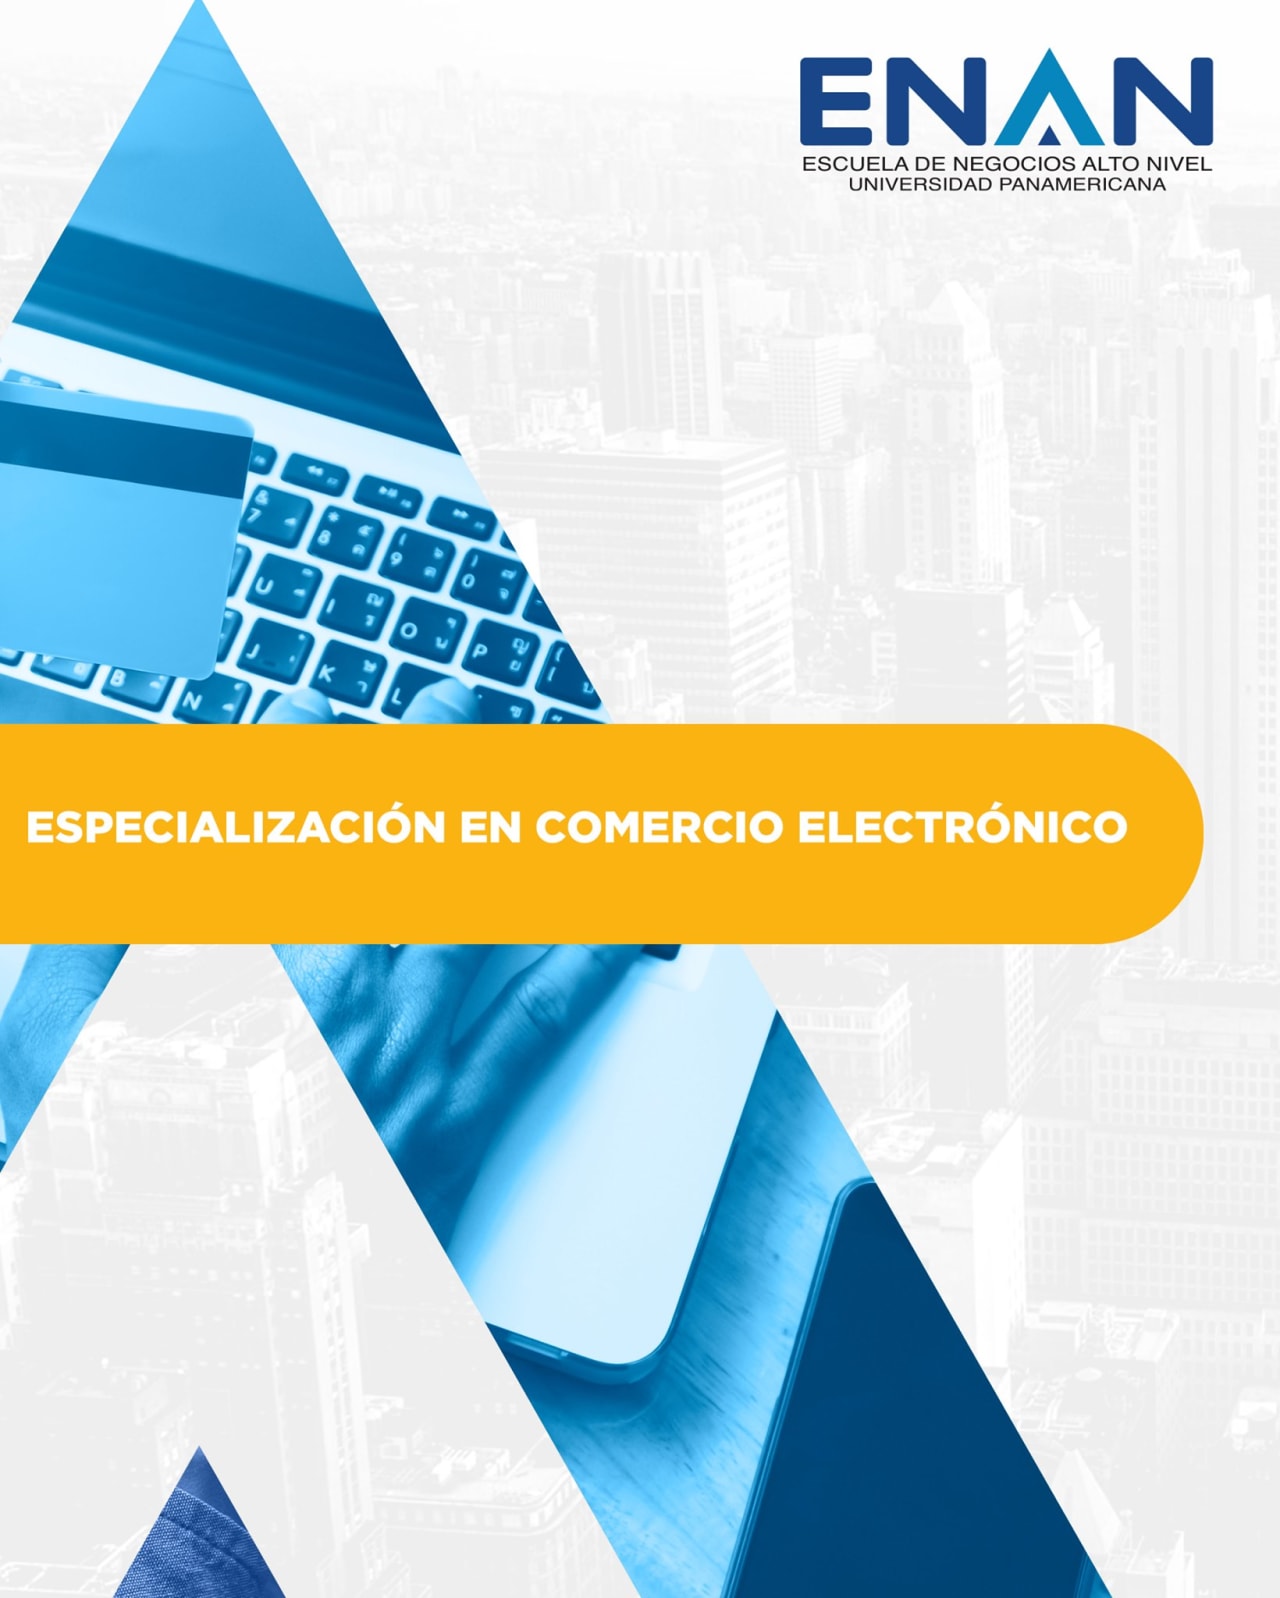 Escuela de Negocios Alto Nivel - Universidad Panamericana de Guatemala Специјализација за електронску трговину